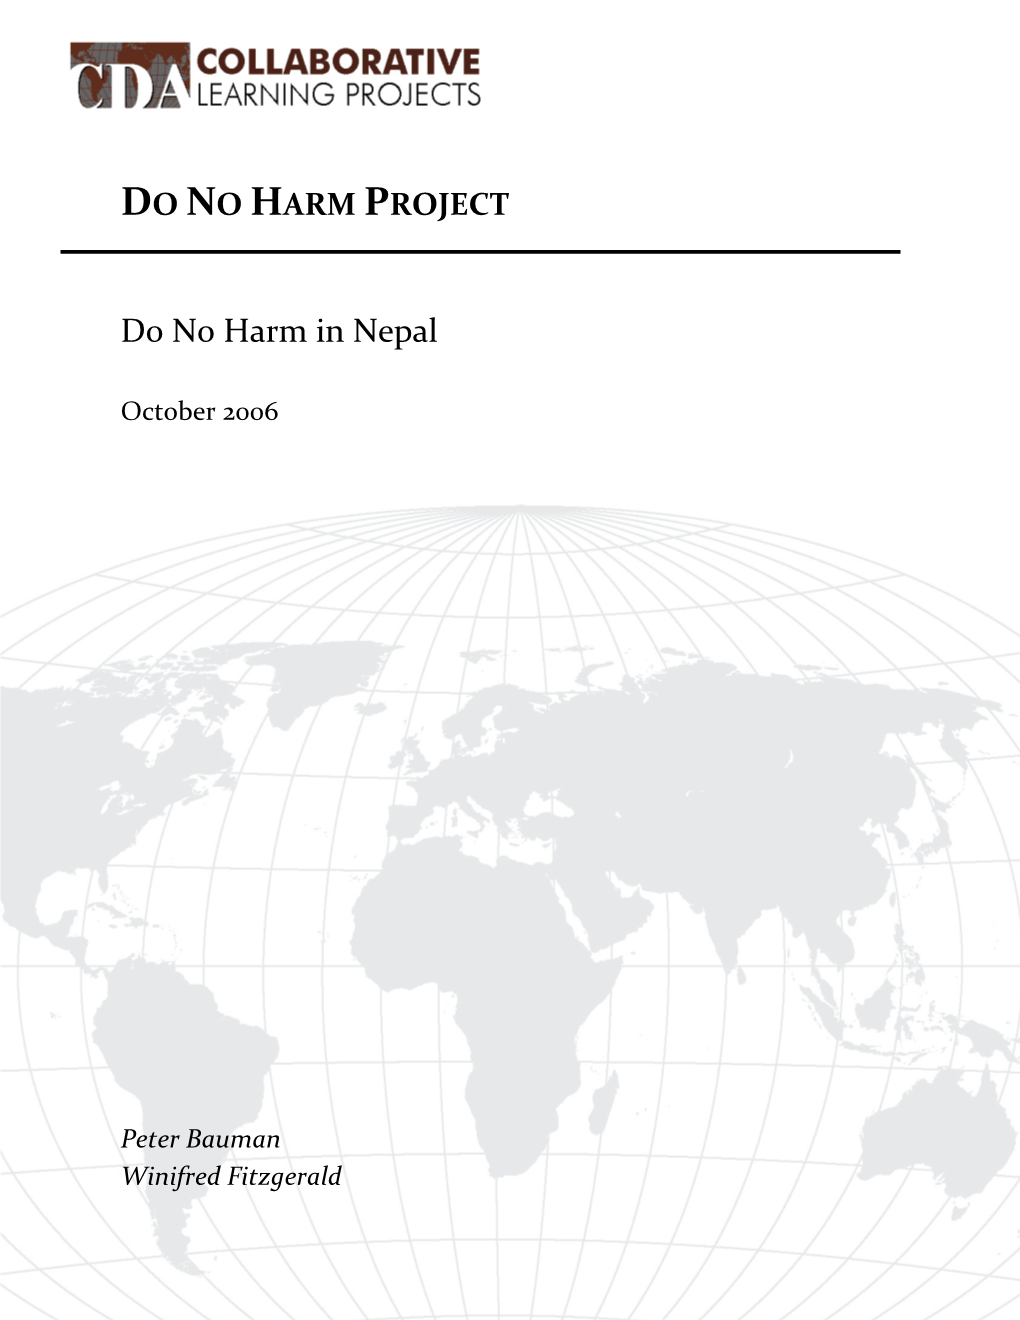 Do No Harm in Nepal